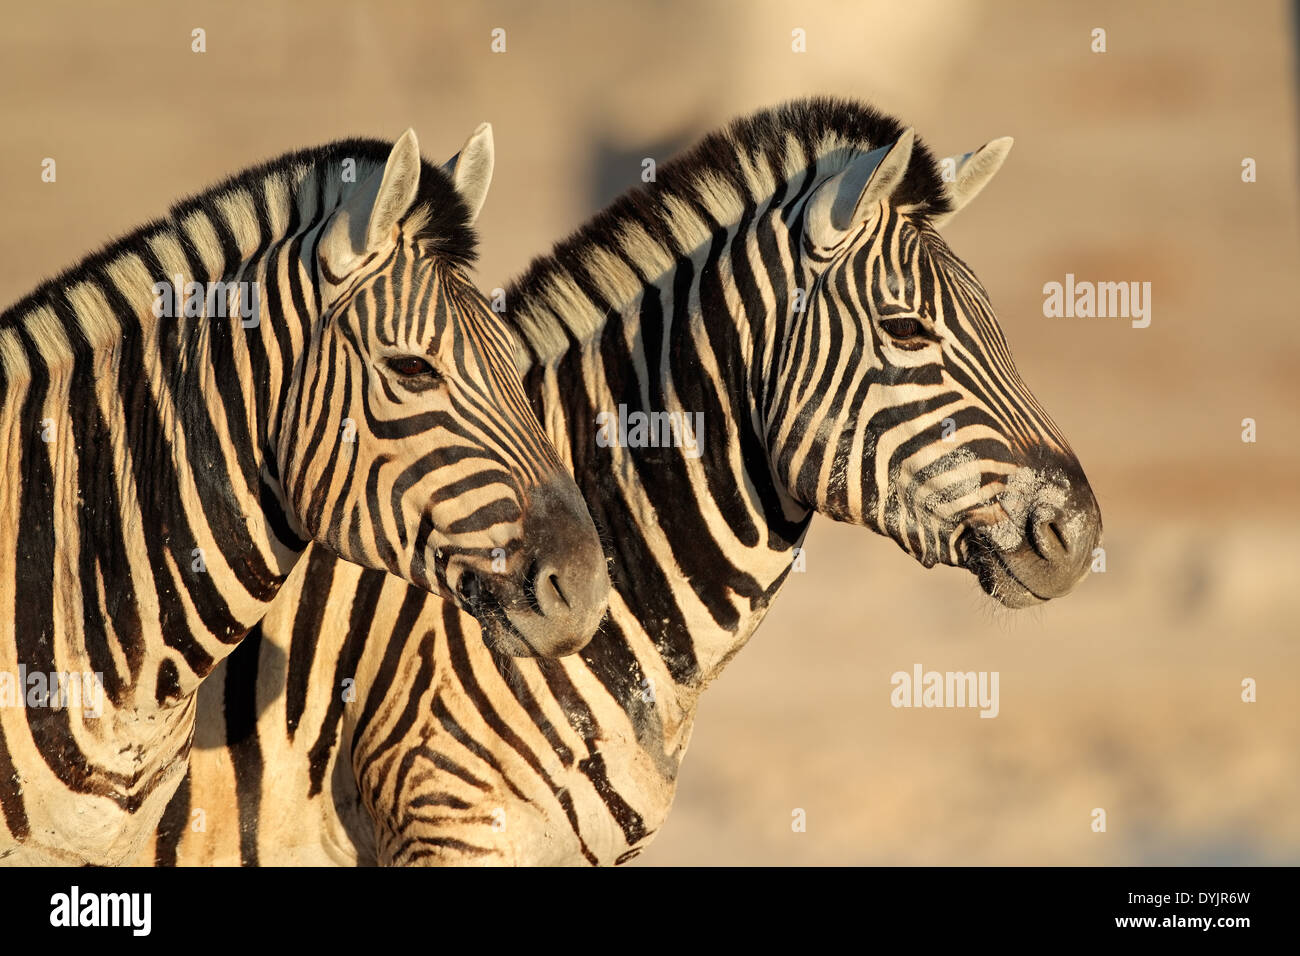 Ritratto di due pianure (Burchells) zebre (Equus burchelli), Etsosha National Park, Namibia Foto Stock